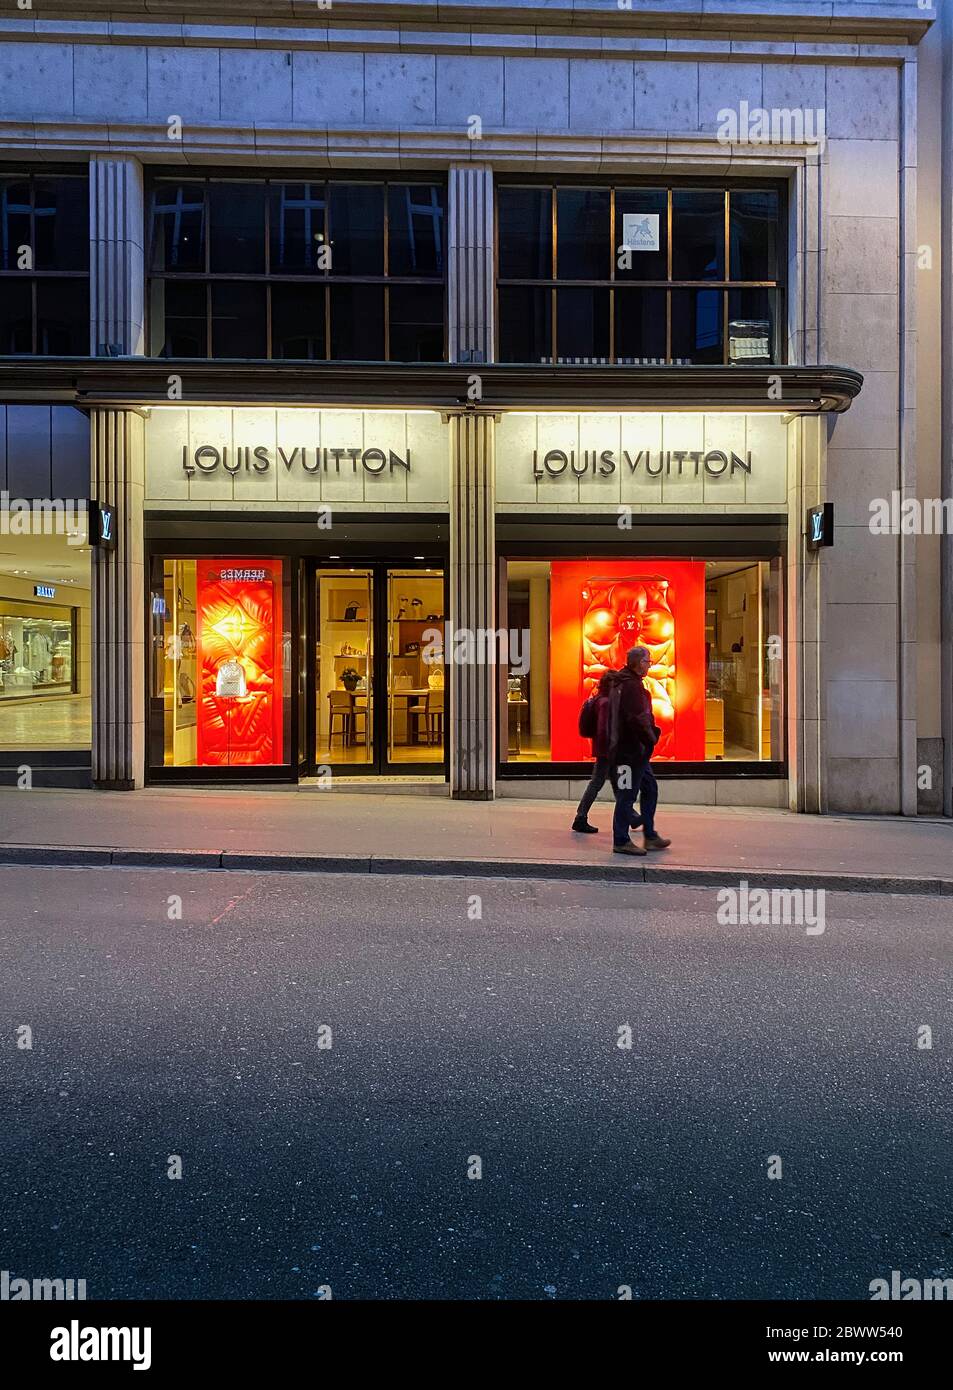 The Louis Vuitton shop front, Basel, Switzerland. Stock Photo